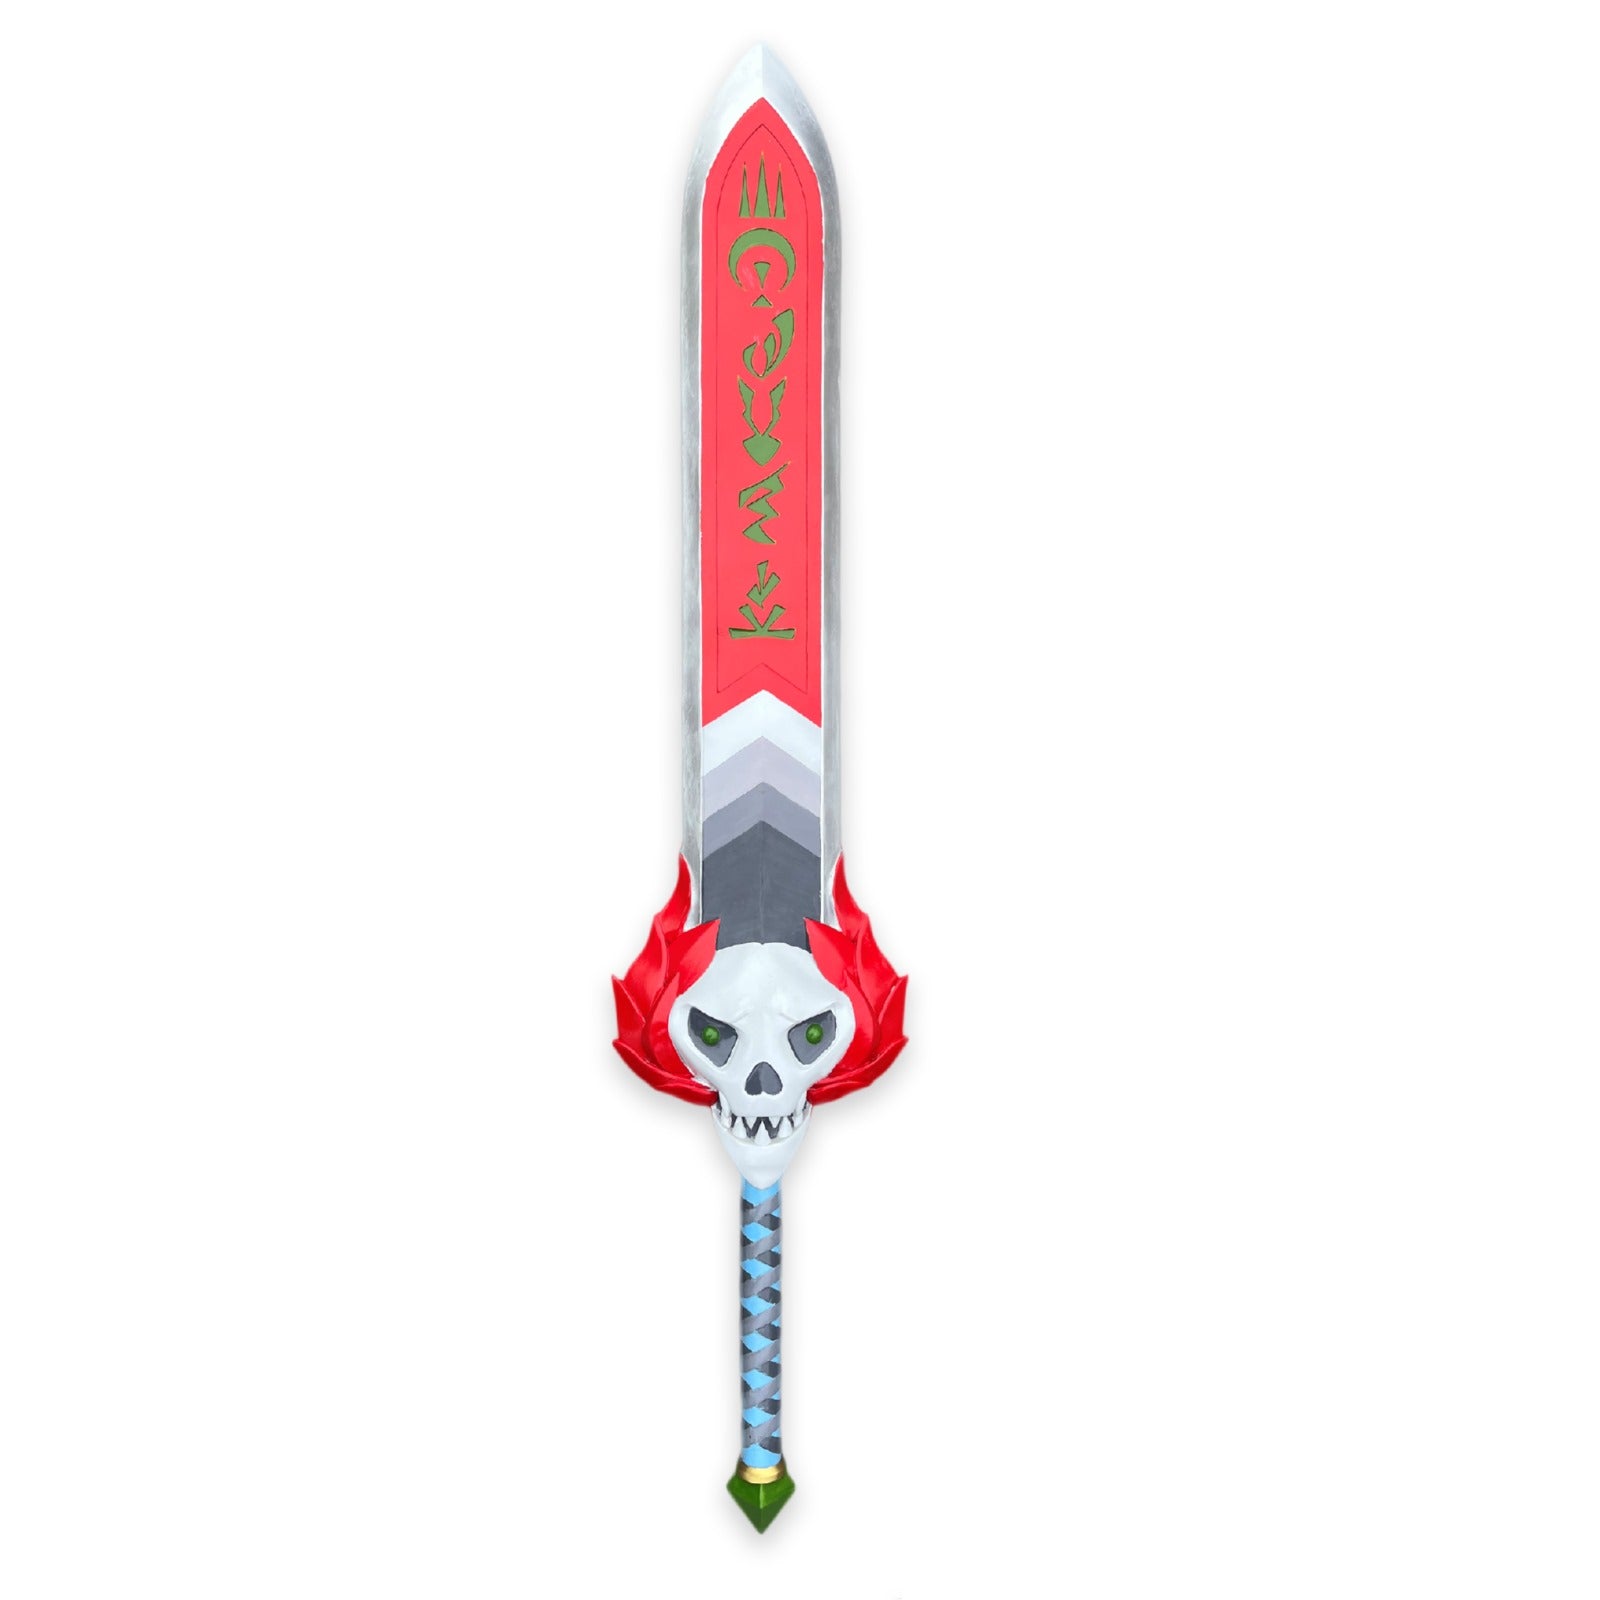 Hades Zagreus Stygian Blade Blade of the Underworld Resin Sword Replica JT3229